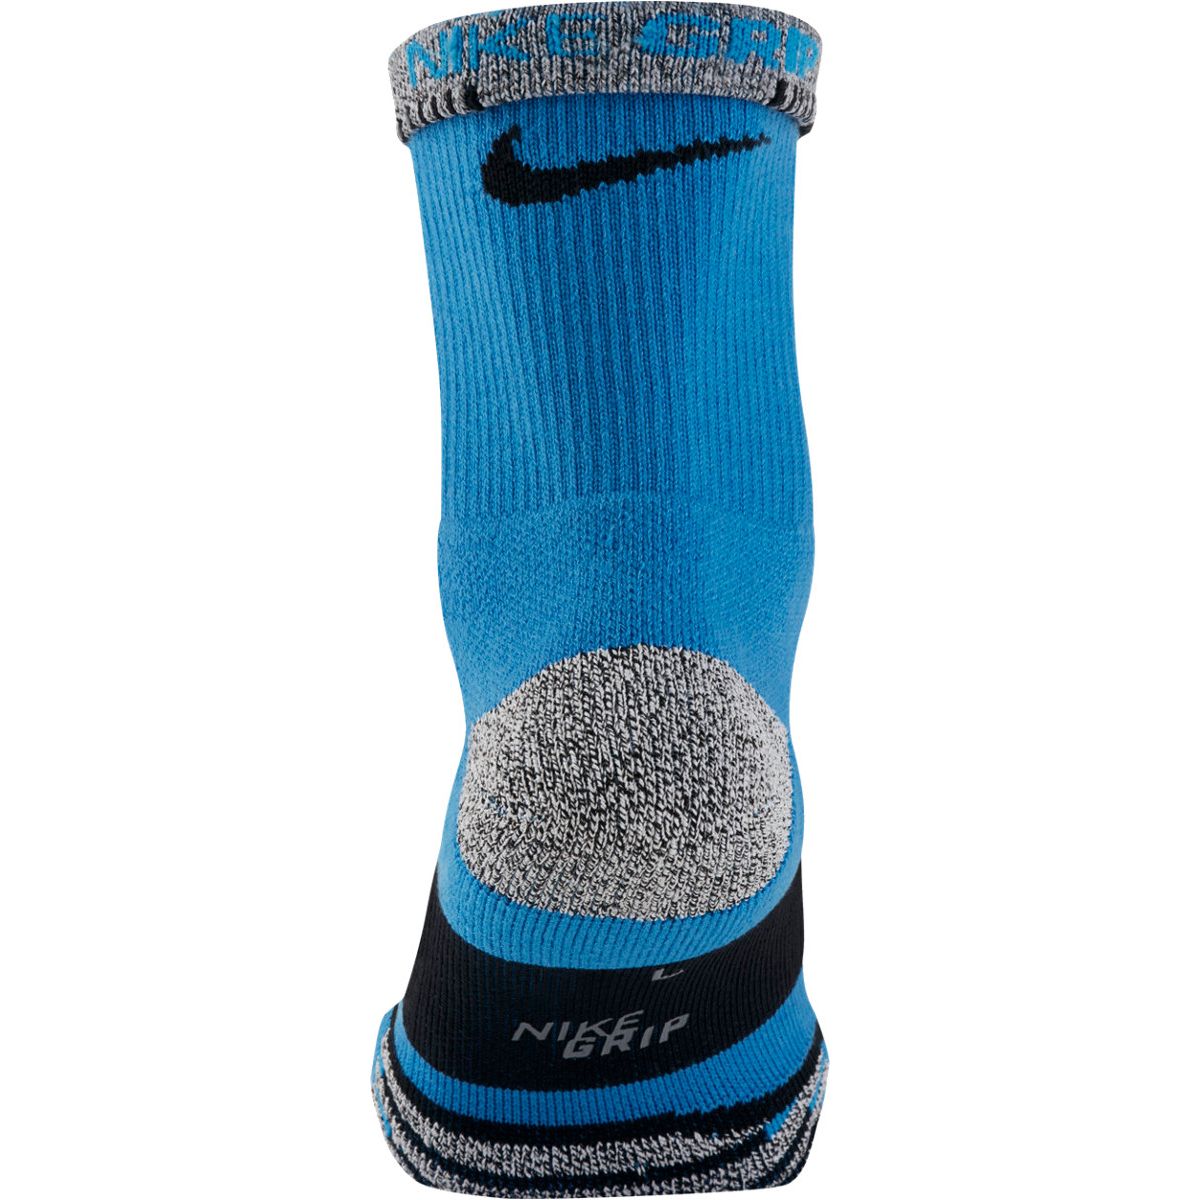 Nike Unisex Nikegrip Elite Crew Tennis Socks (1 pair) SX5666